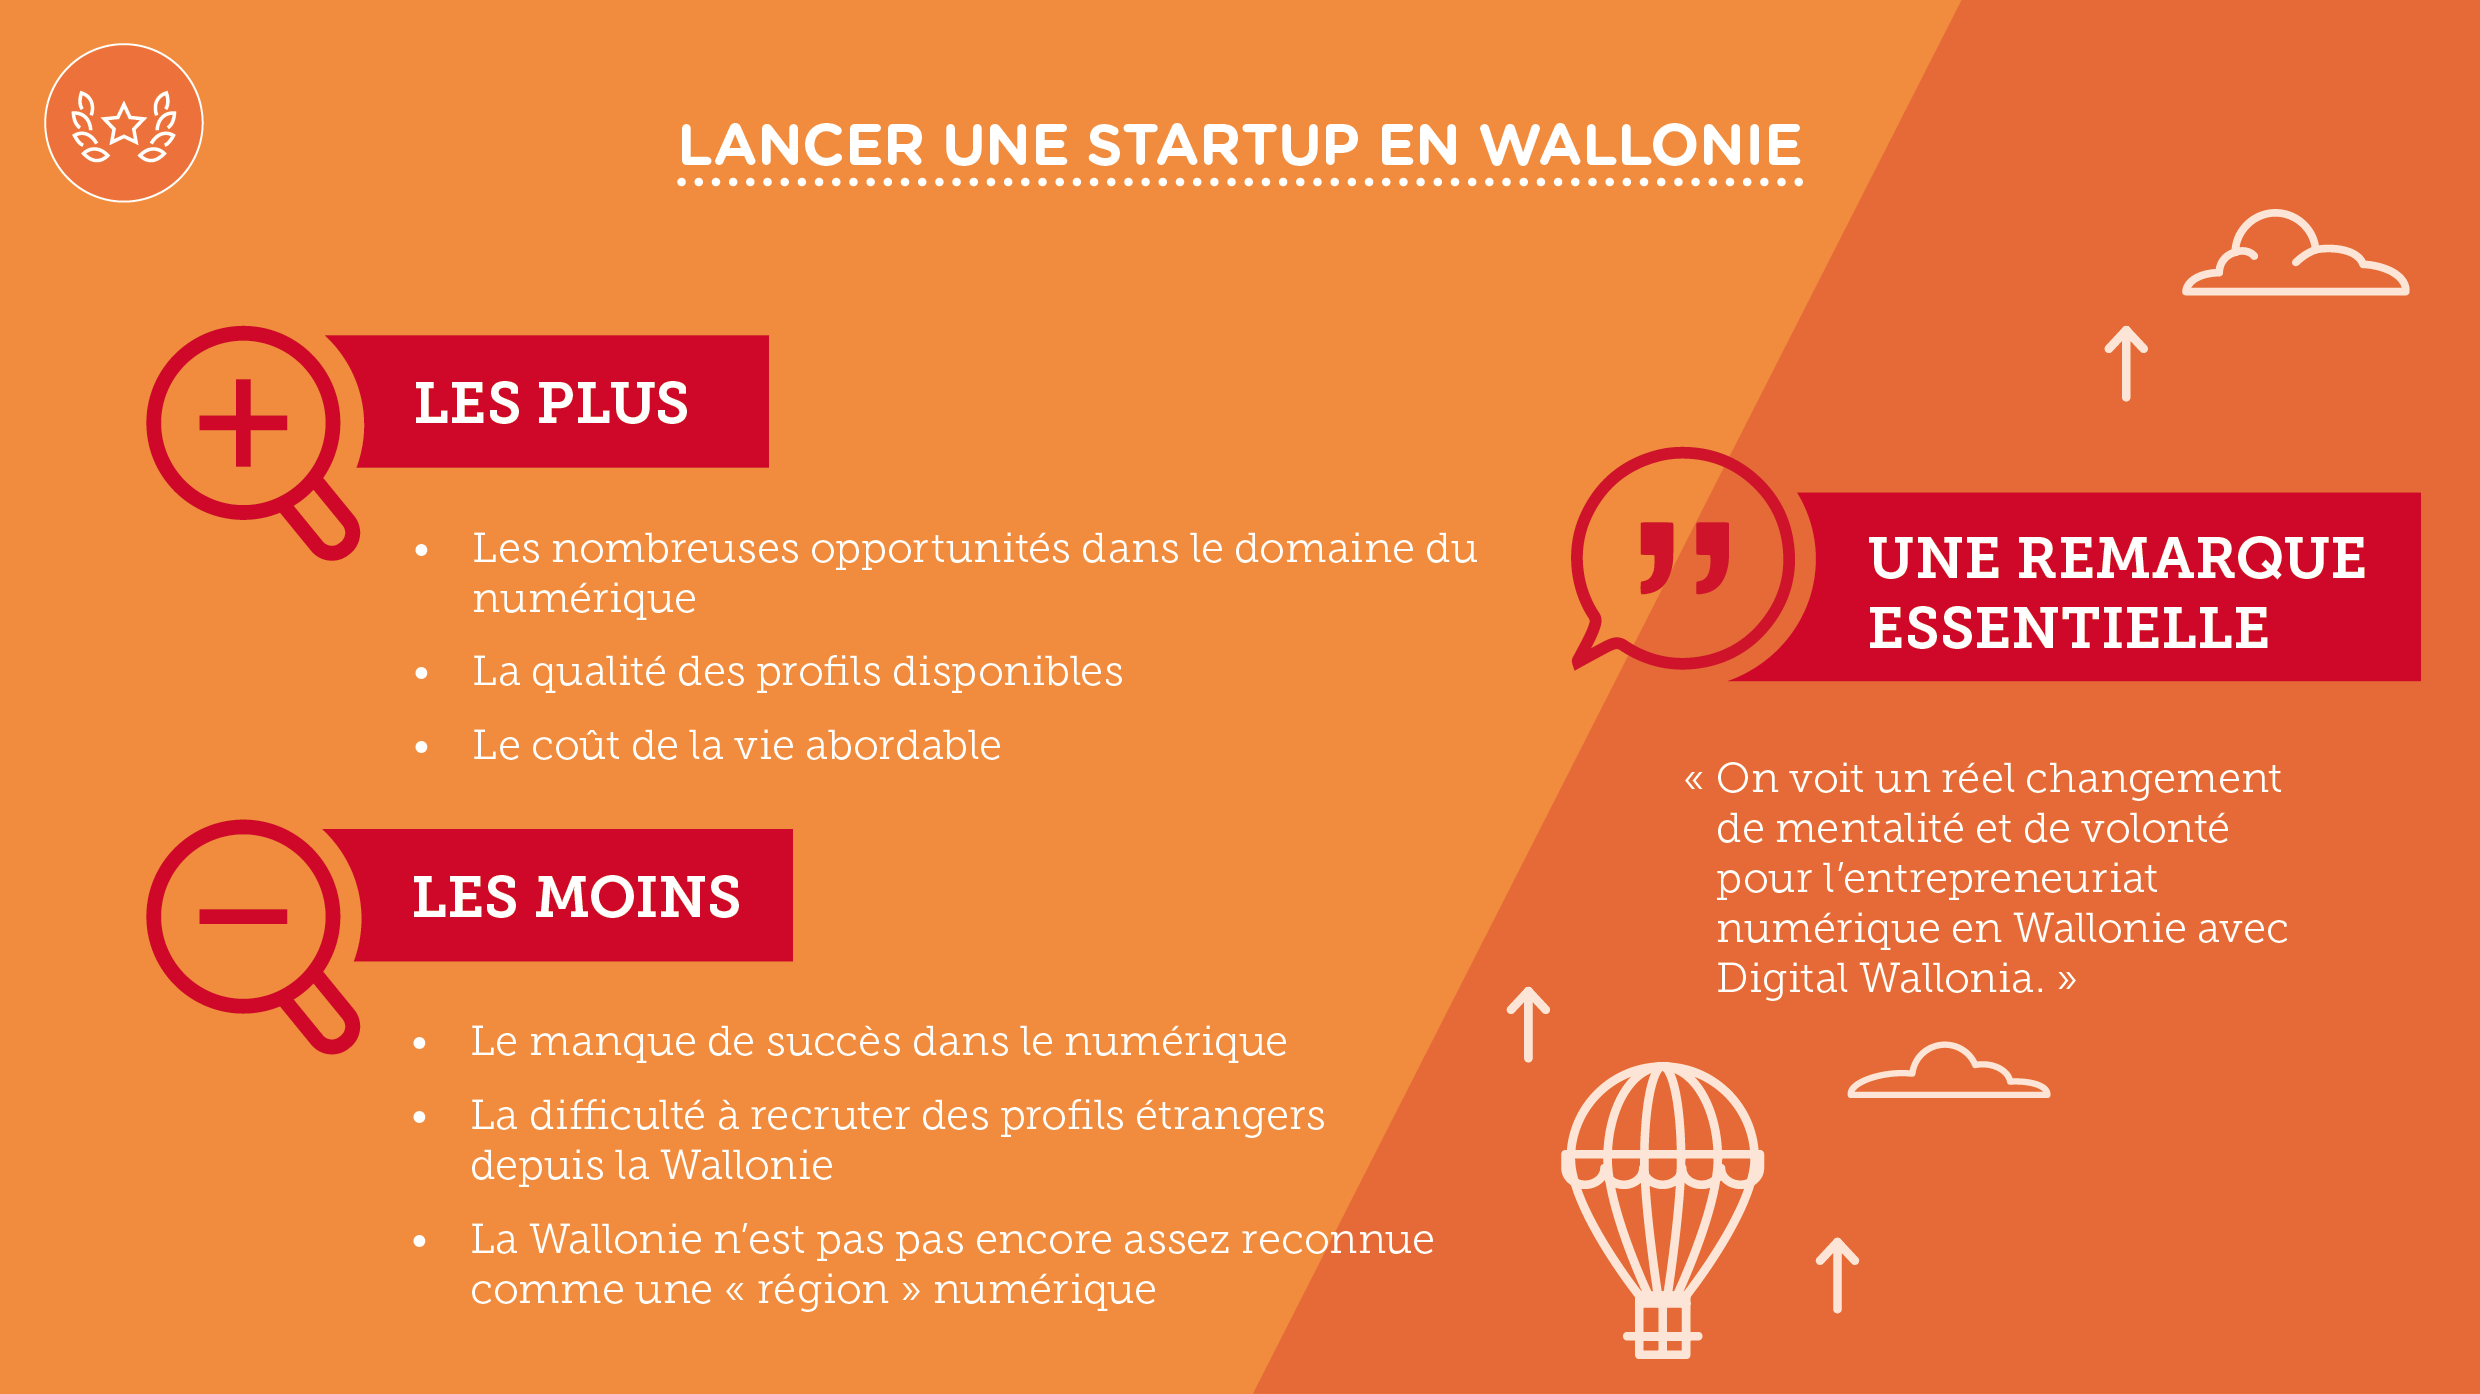 2017-Barom%C3%A8tre-Digital-Wallonia-Startups-Num%C3%A9riques-Lancement-Propositions.png